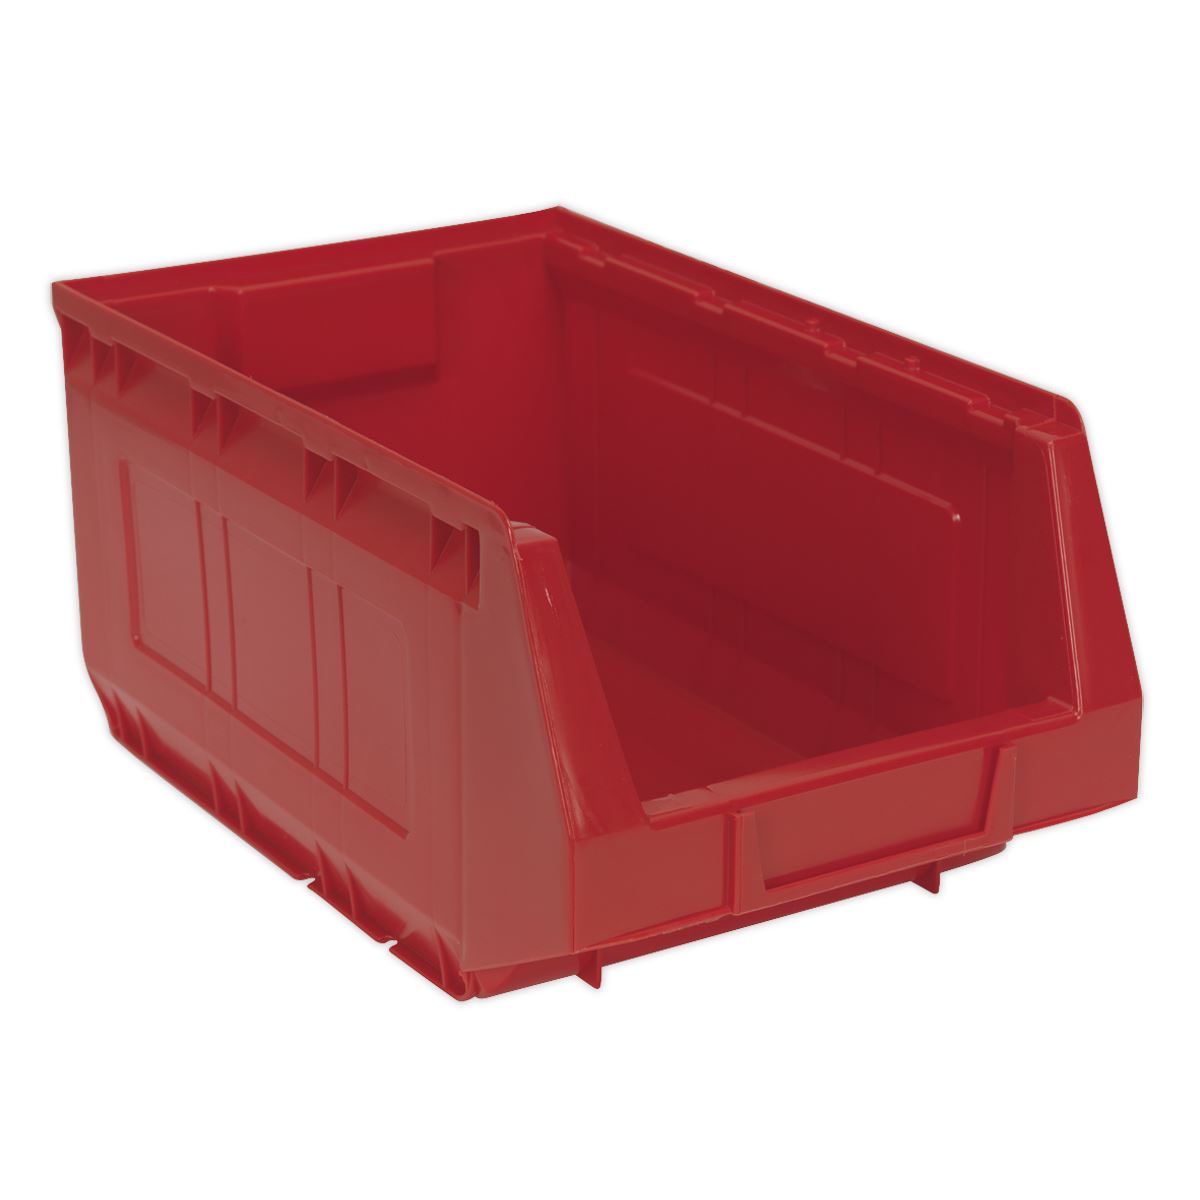 Sealey Plastic Storage Bin 210 x 355 x 165mm - Red Pack of 12